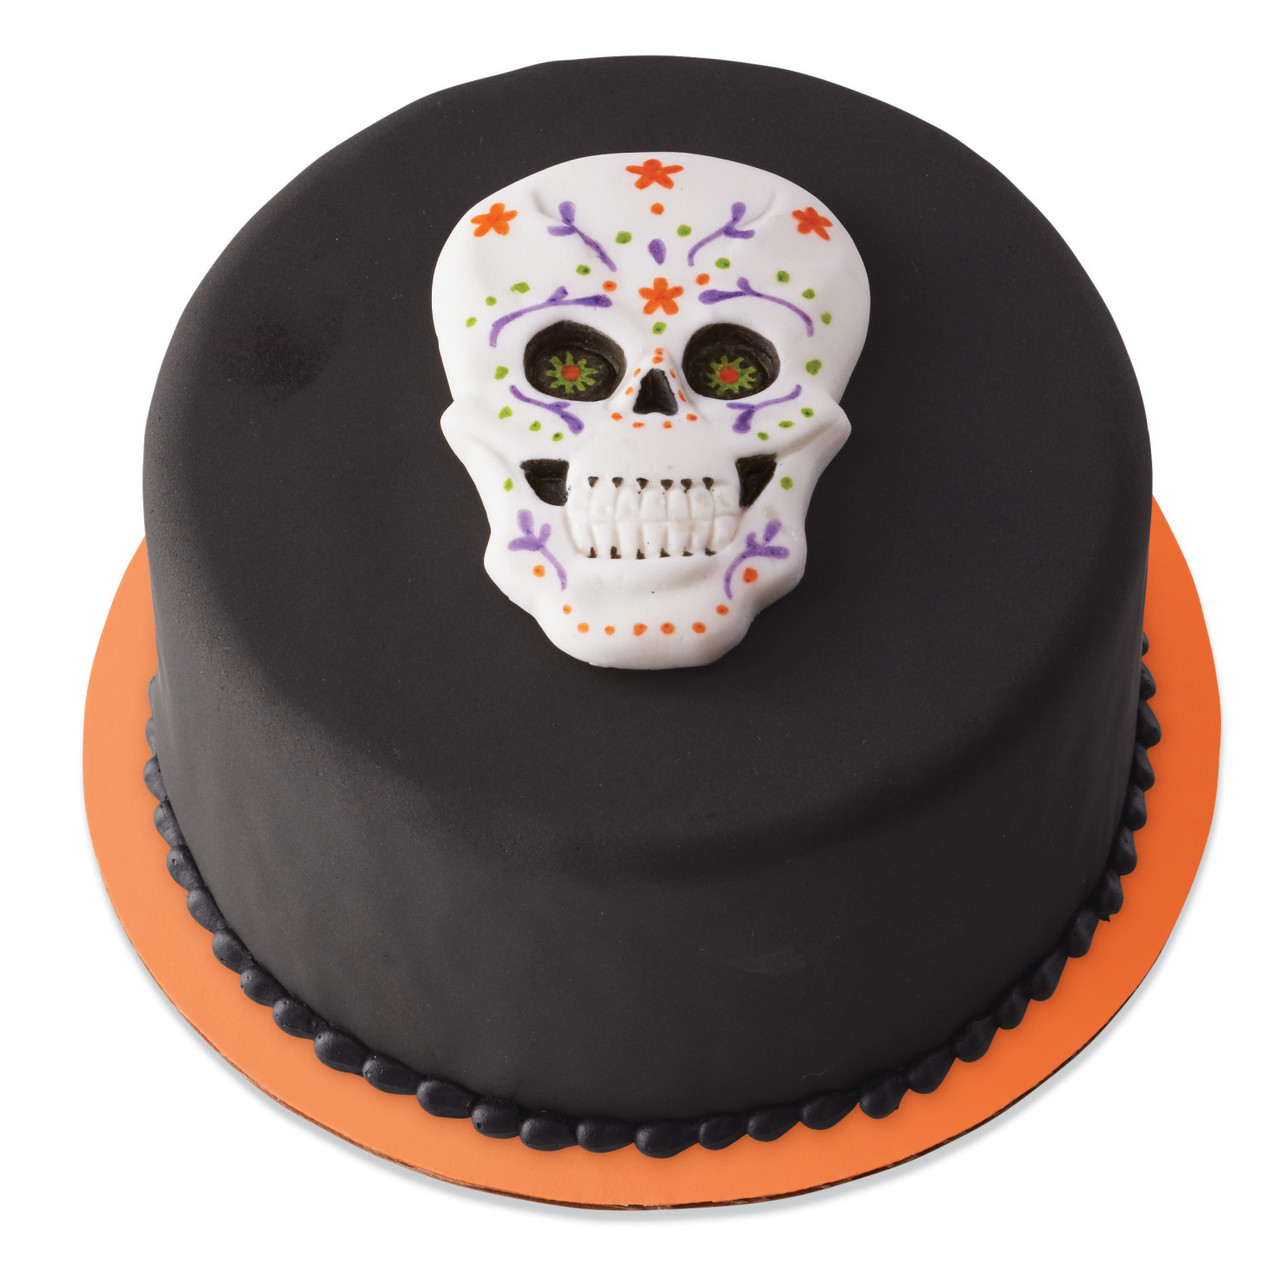 Midnight Black Luxury Edible Cake Glitter – 5 Grams - Vegan, Kosher - Cakes, Cupcakes, Fondant, Decorating, Cake Pops, Candy, USA Made